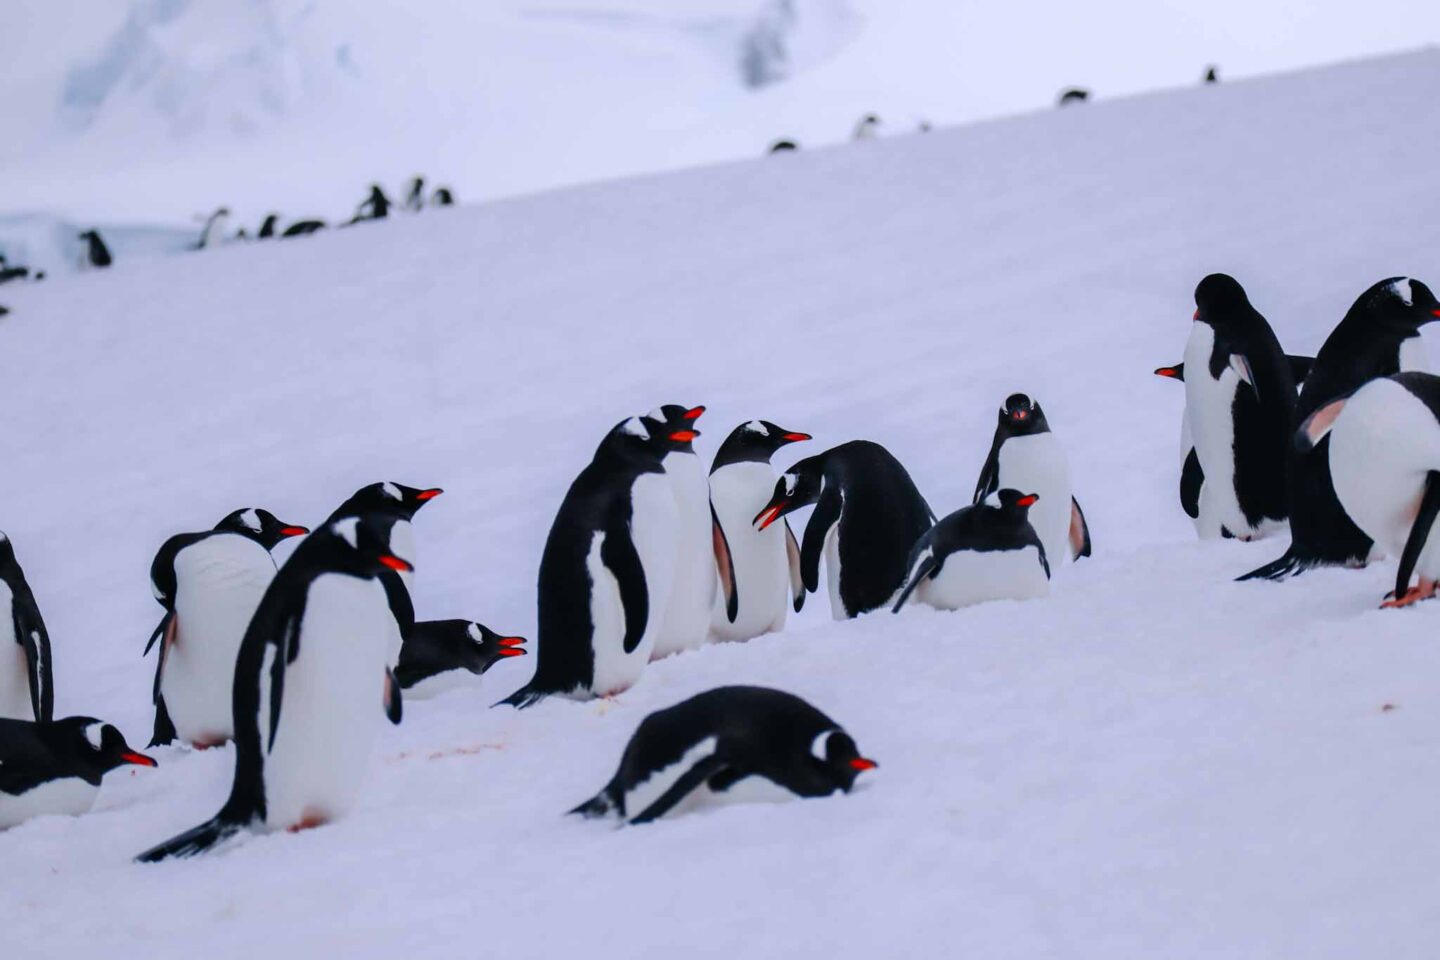 gentoo penguins on snow in Antarctica, Can you visit Antarctica, 